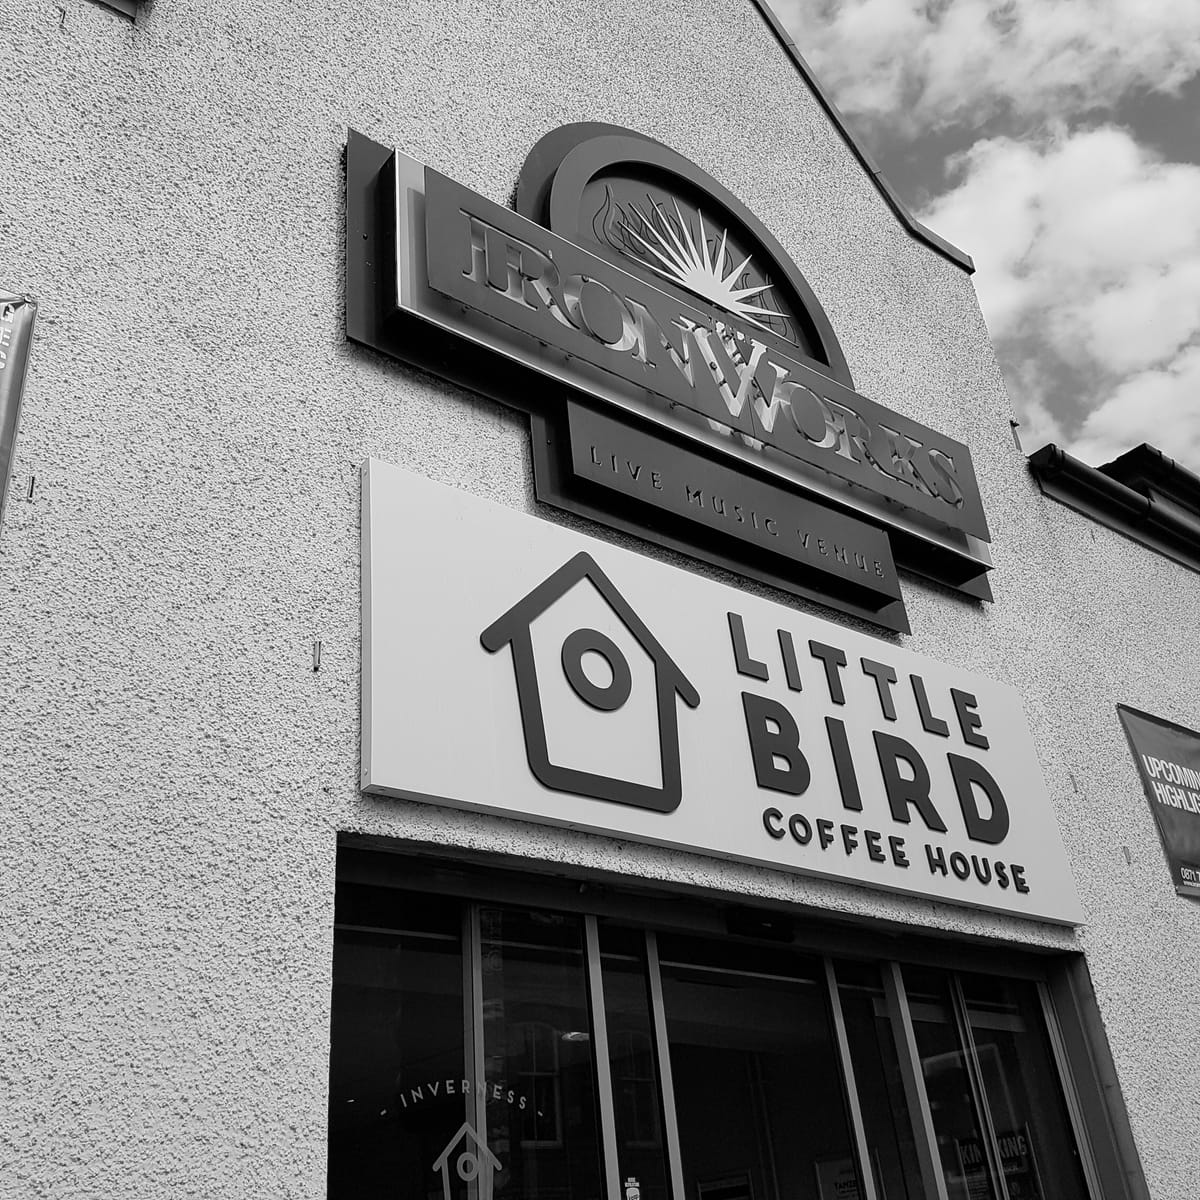 LITTLE BIRD COFFEE HOUSE, INVERNESS